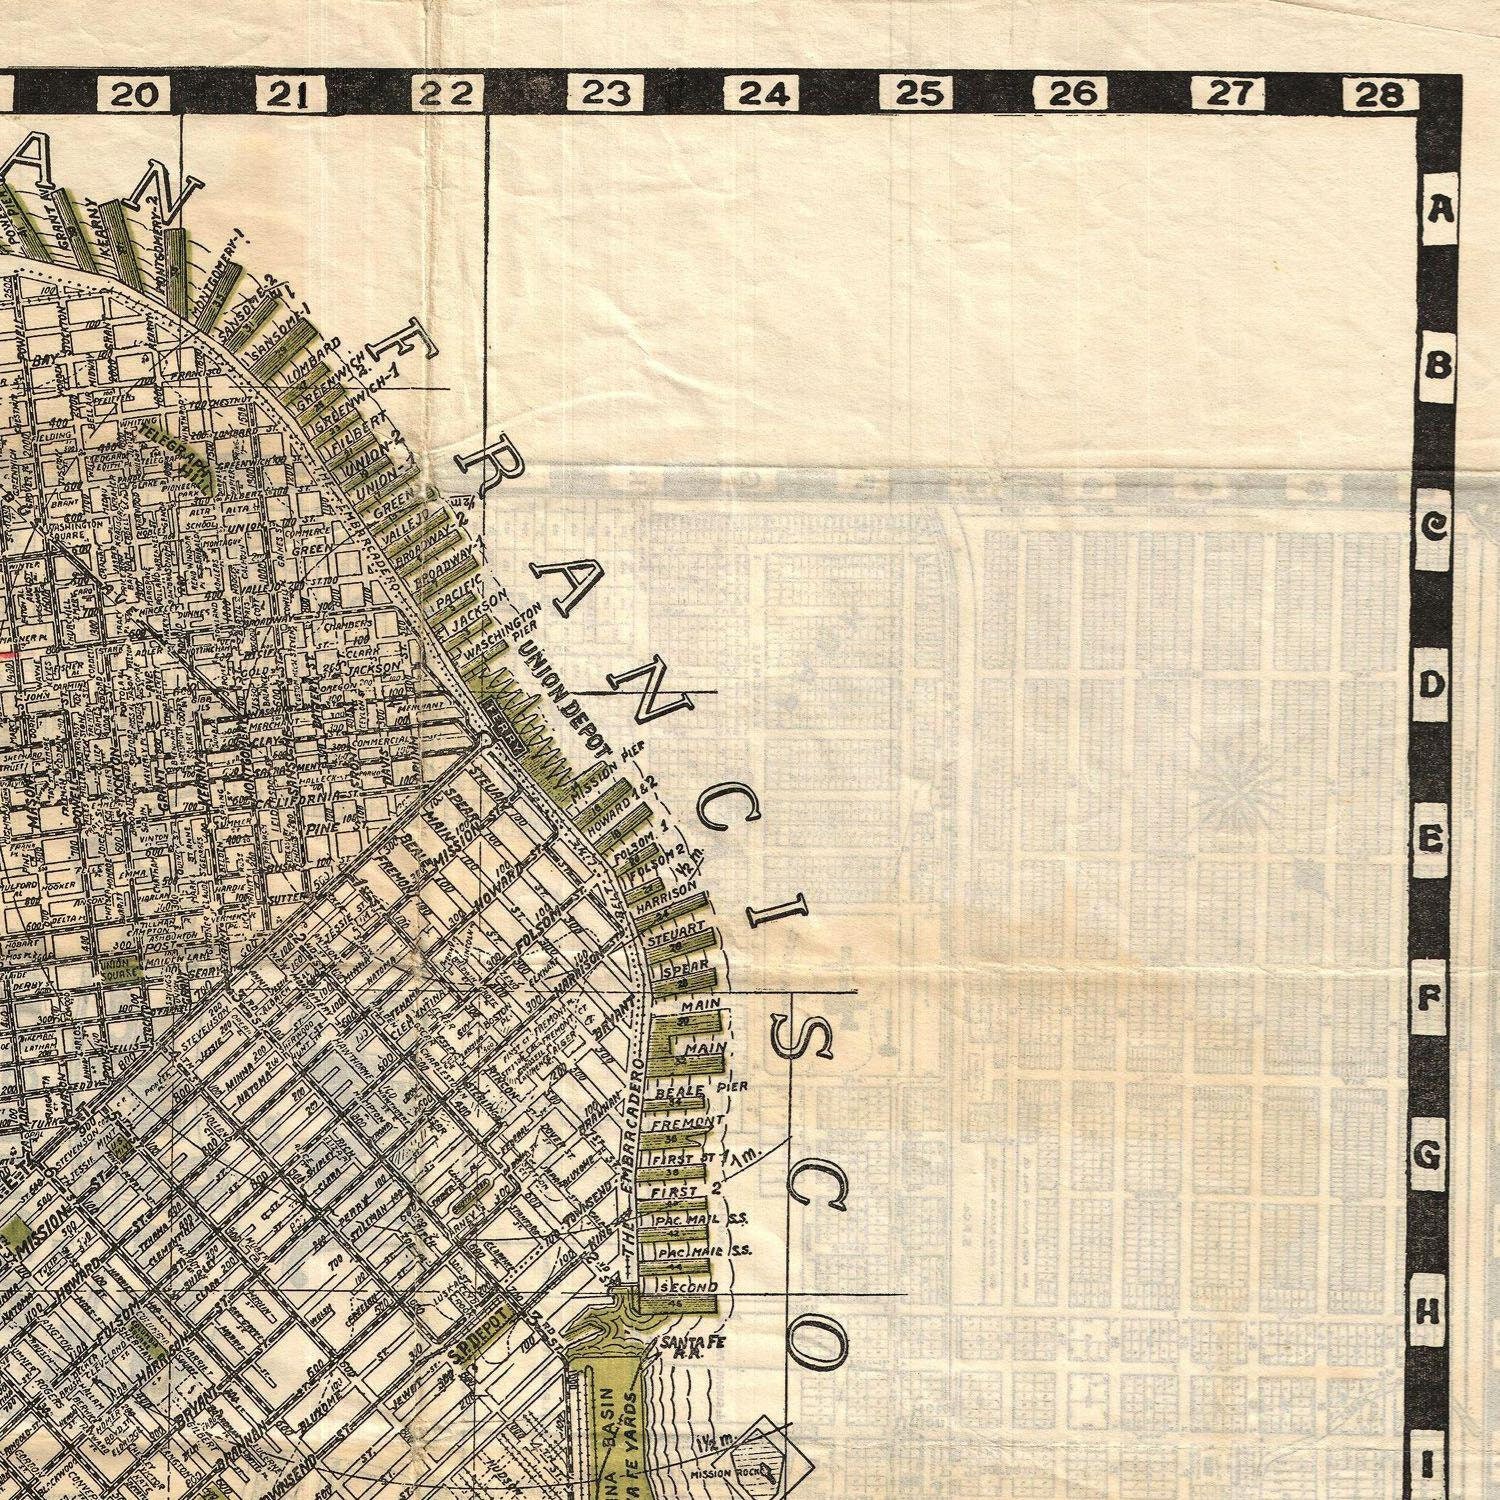 Old map of San Francisco California 1932 antique map,rare map,fine reproduction,large map,fine art print,antique decor,oversize map print